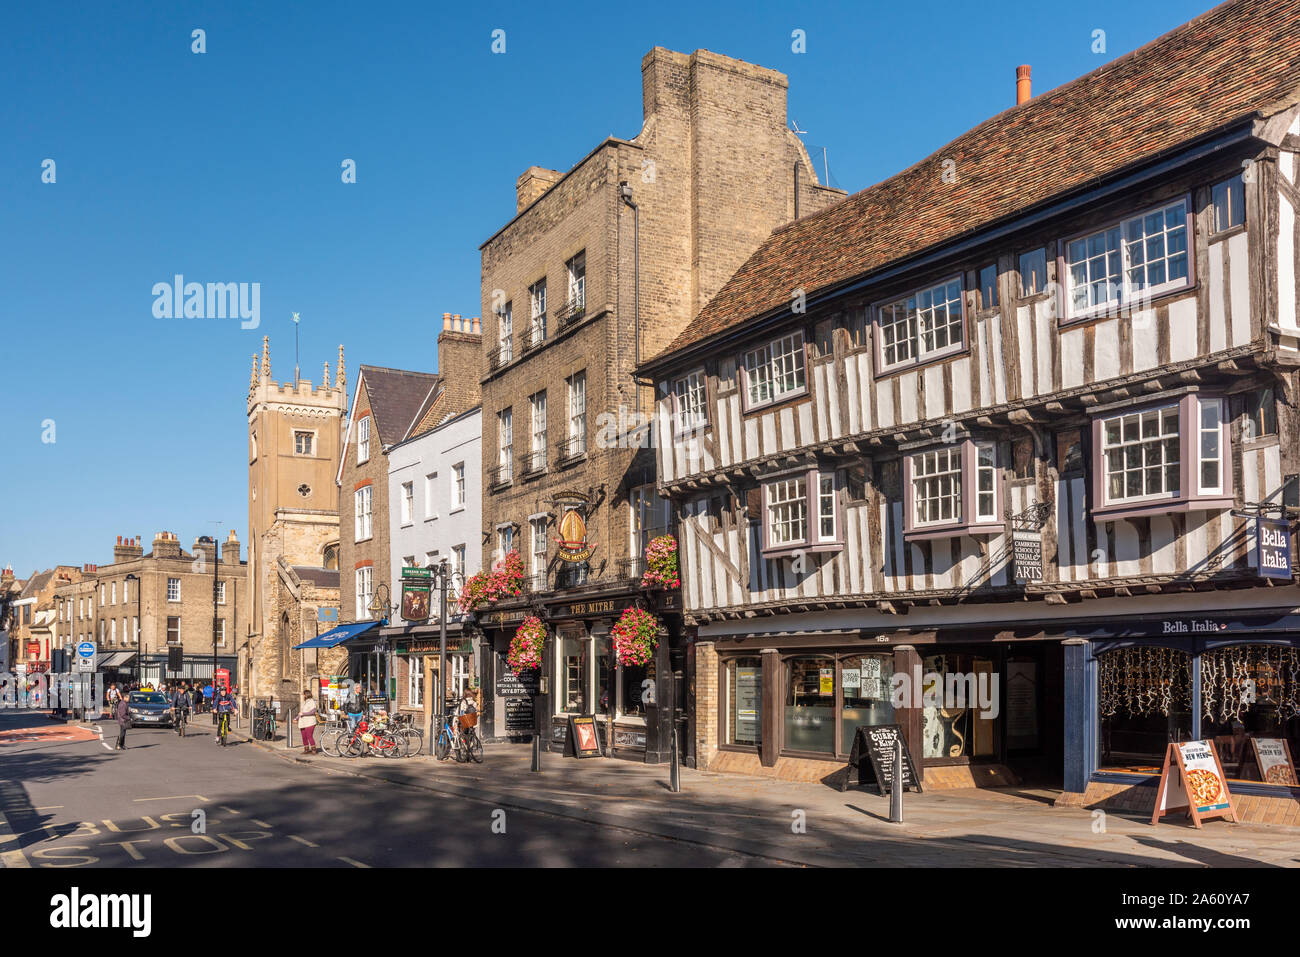 The Mitre and The Baron of Beef pubs, Bridge Street, Cambridge, Cambridgeshire, England, United Kingdom, Europe Stock Photo